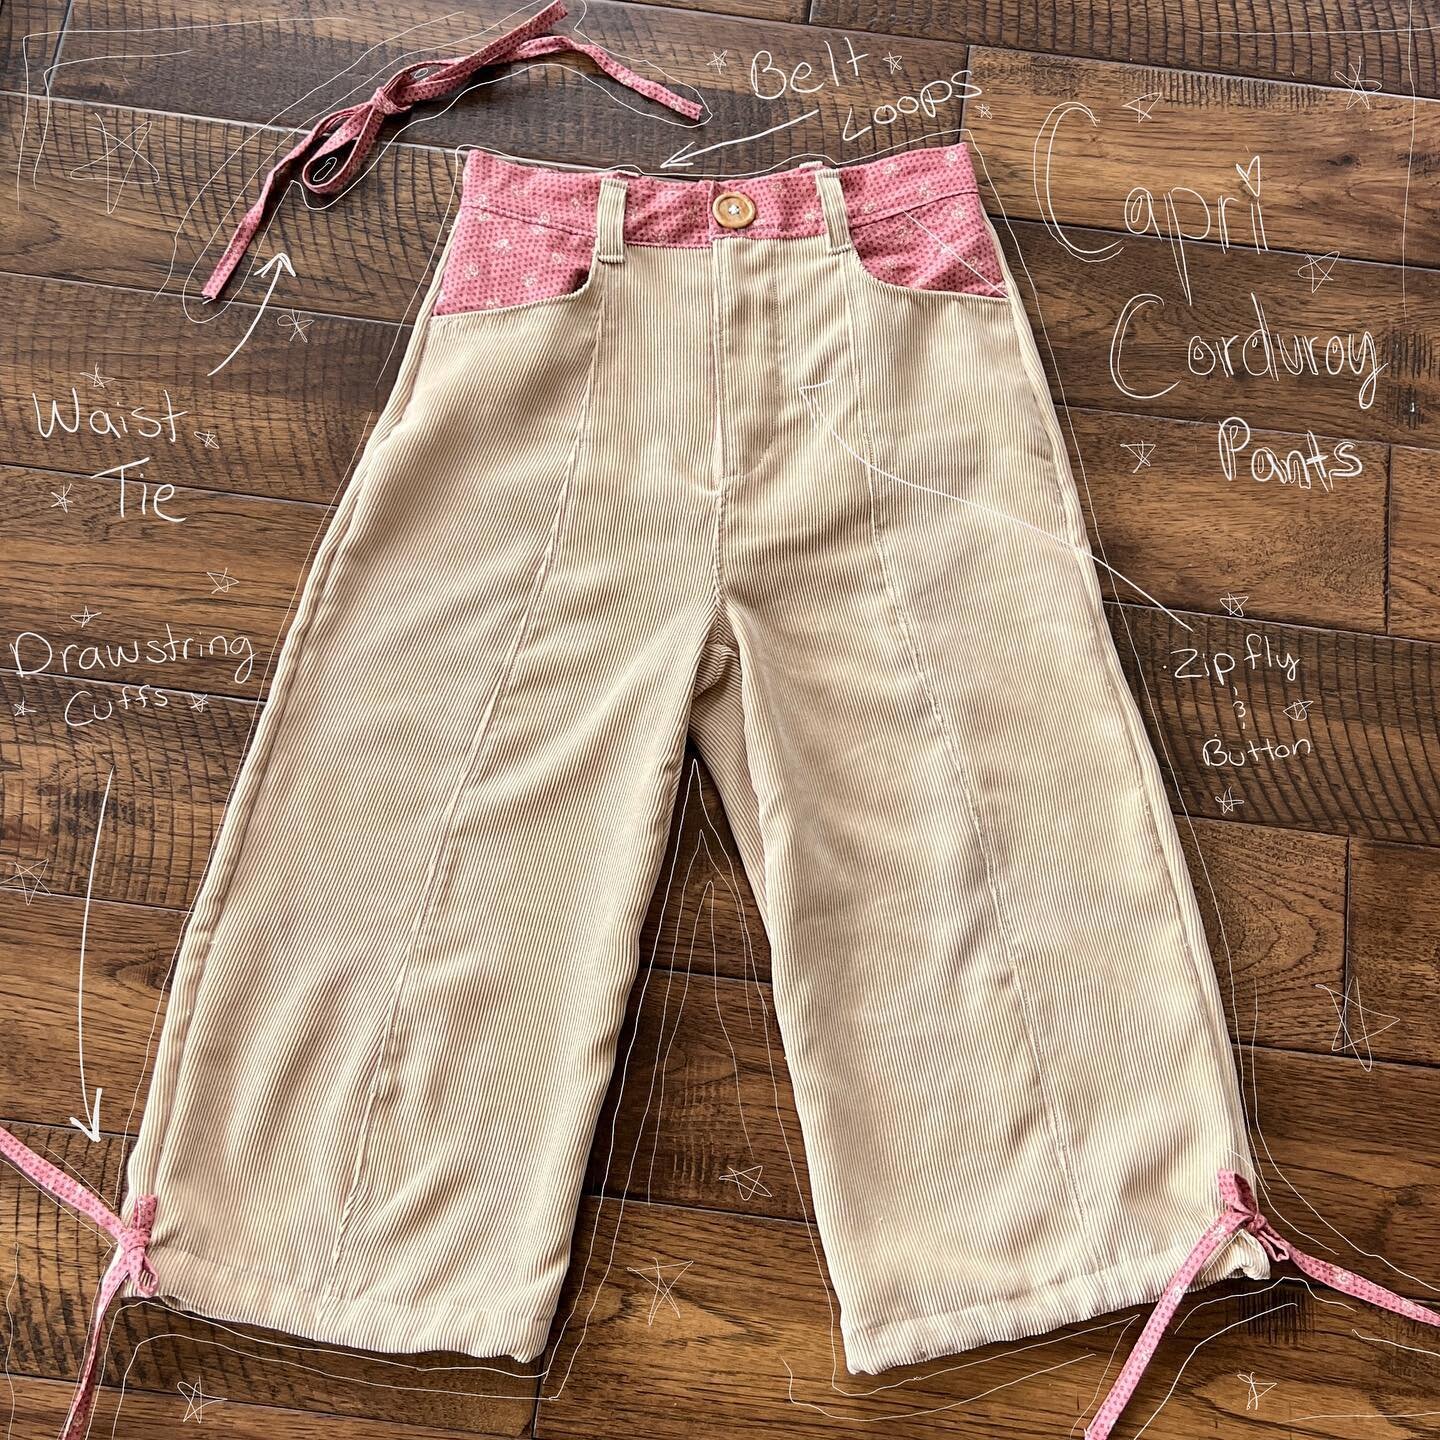 Capri Corduroy Pants ◡̈
&bull;
&bull;
&bull;
Pants feature drawstring cuffs, zip fly + button closure, belt loops &amp; a tie waistband.